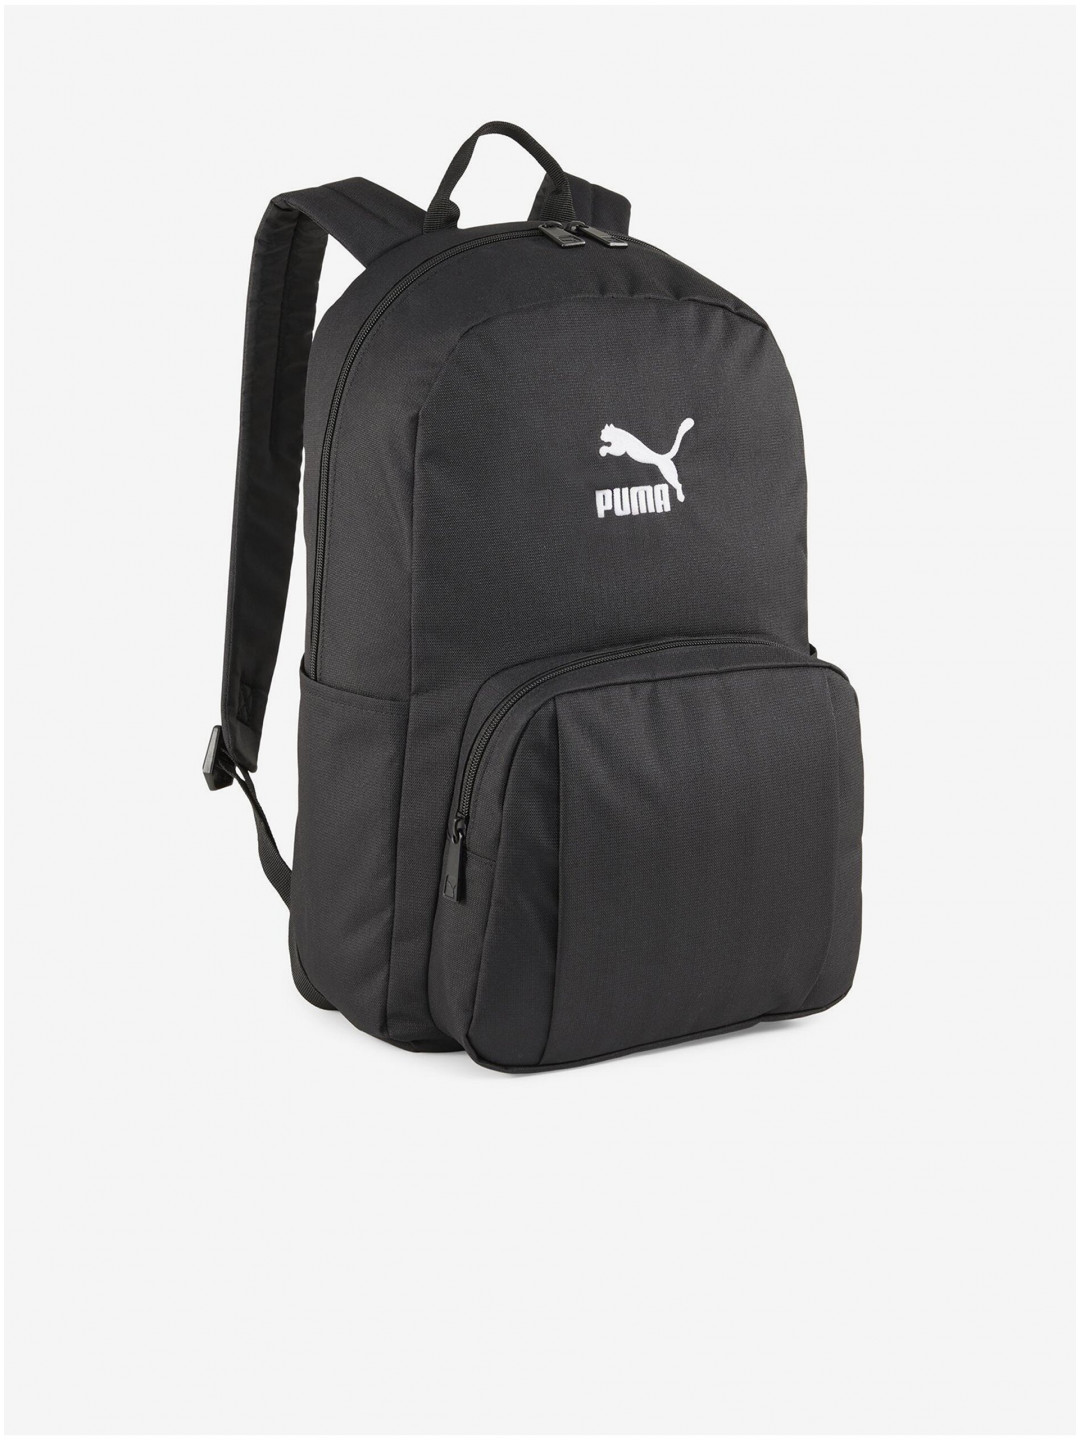 Černý batoh Puma Classics Archive Backpack